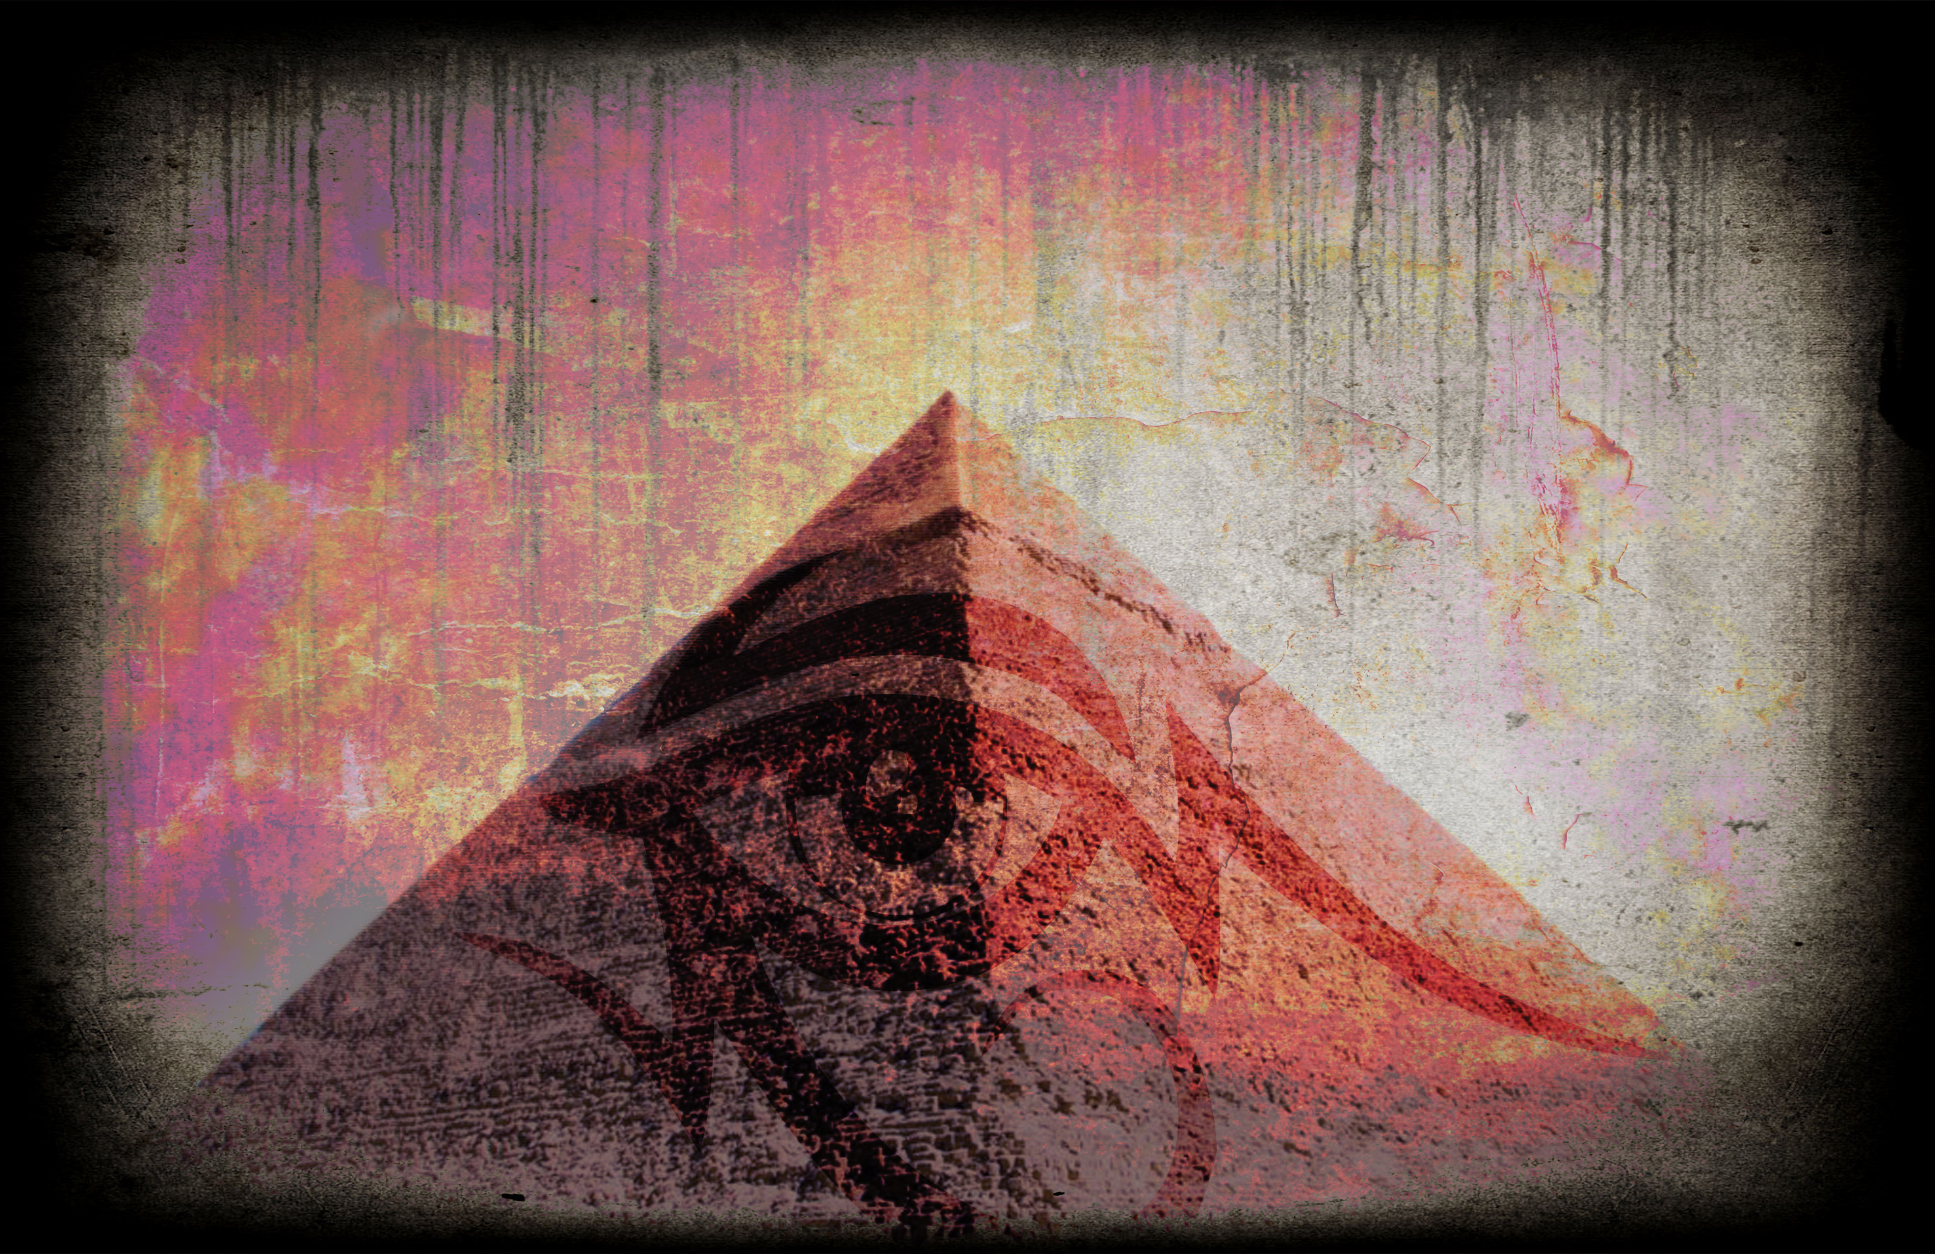 Illuminati Wallpaper Backgrounds images